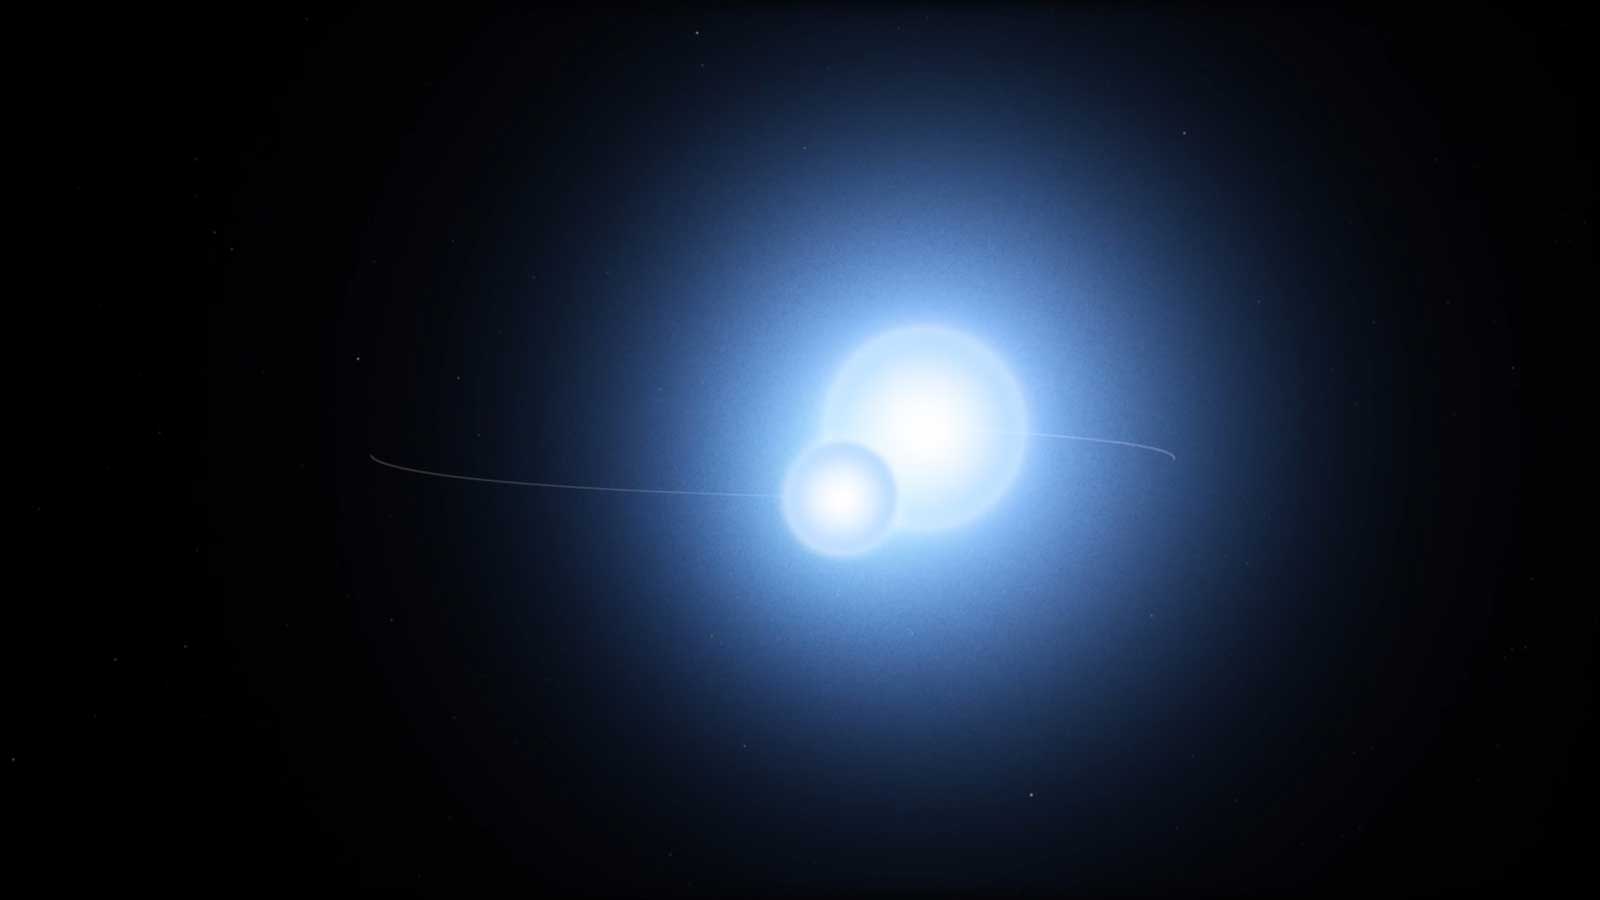 slide 1 - eclipsing binary stars